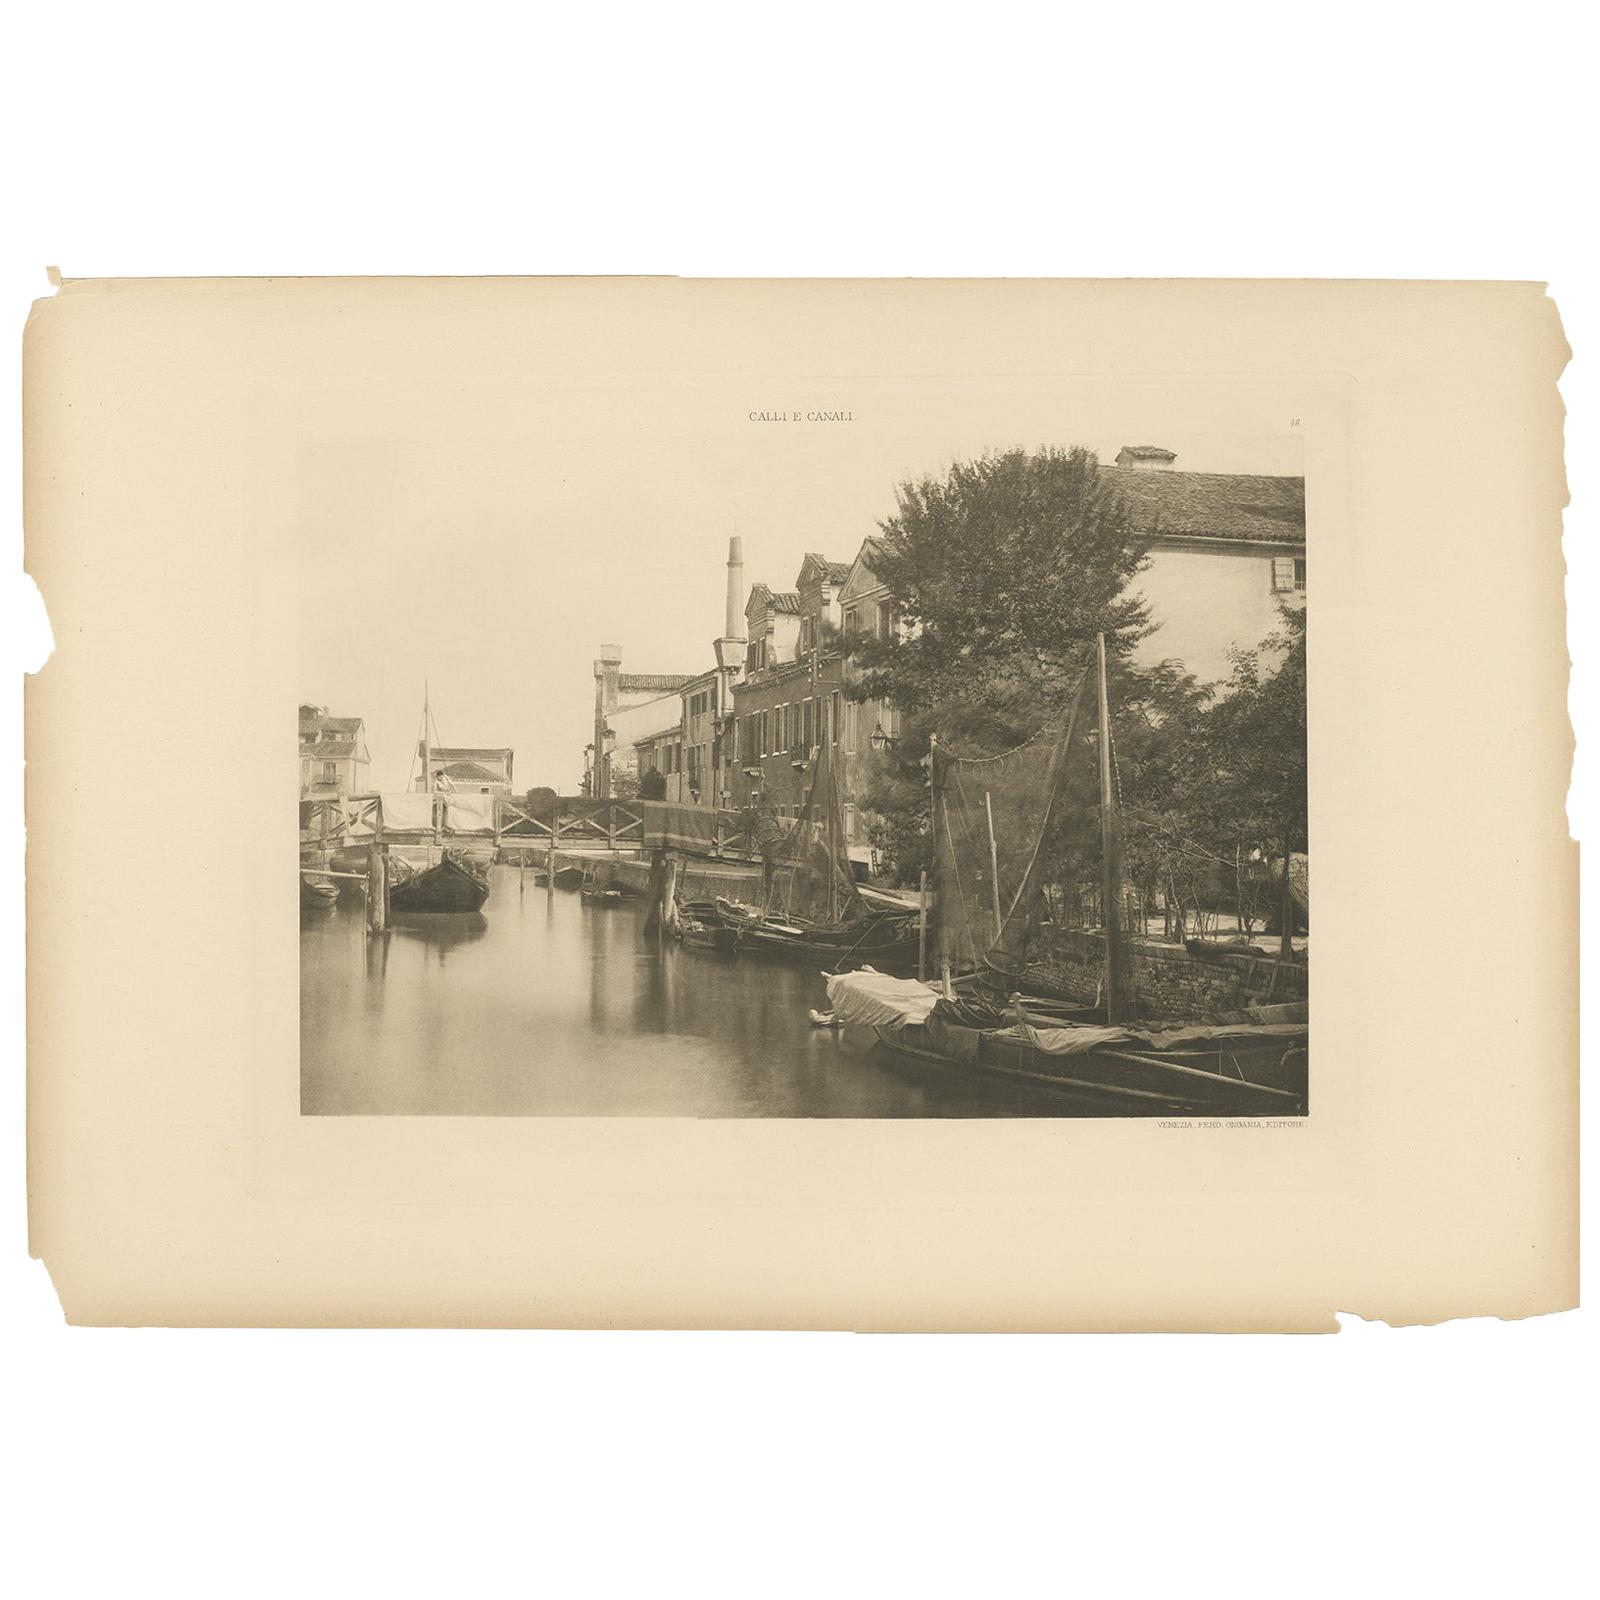 Pl. 48 Antique Print of a Canal in the Giudecca Island of Venice, circa 1890